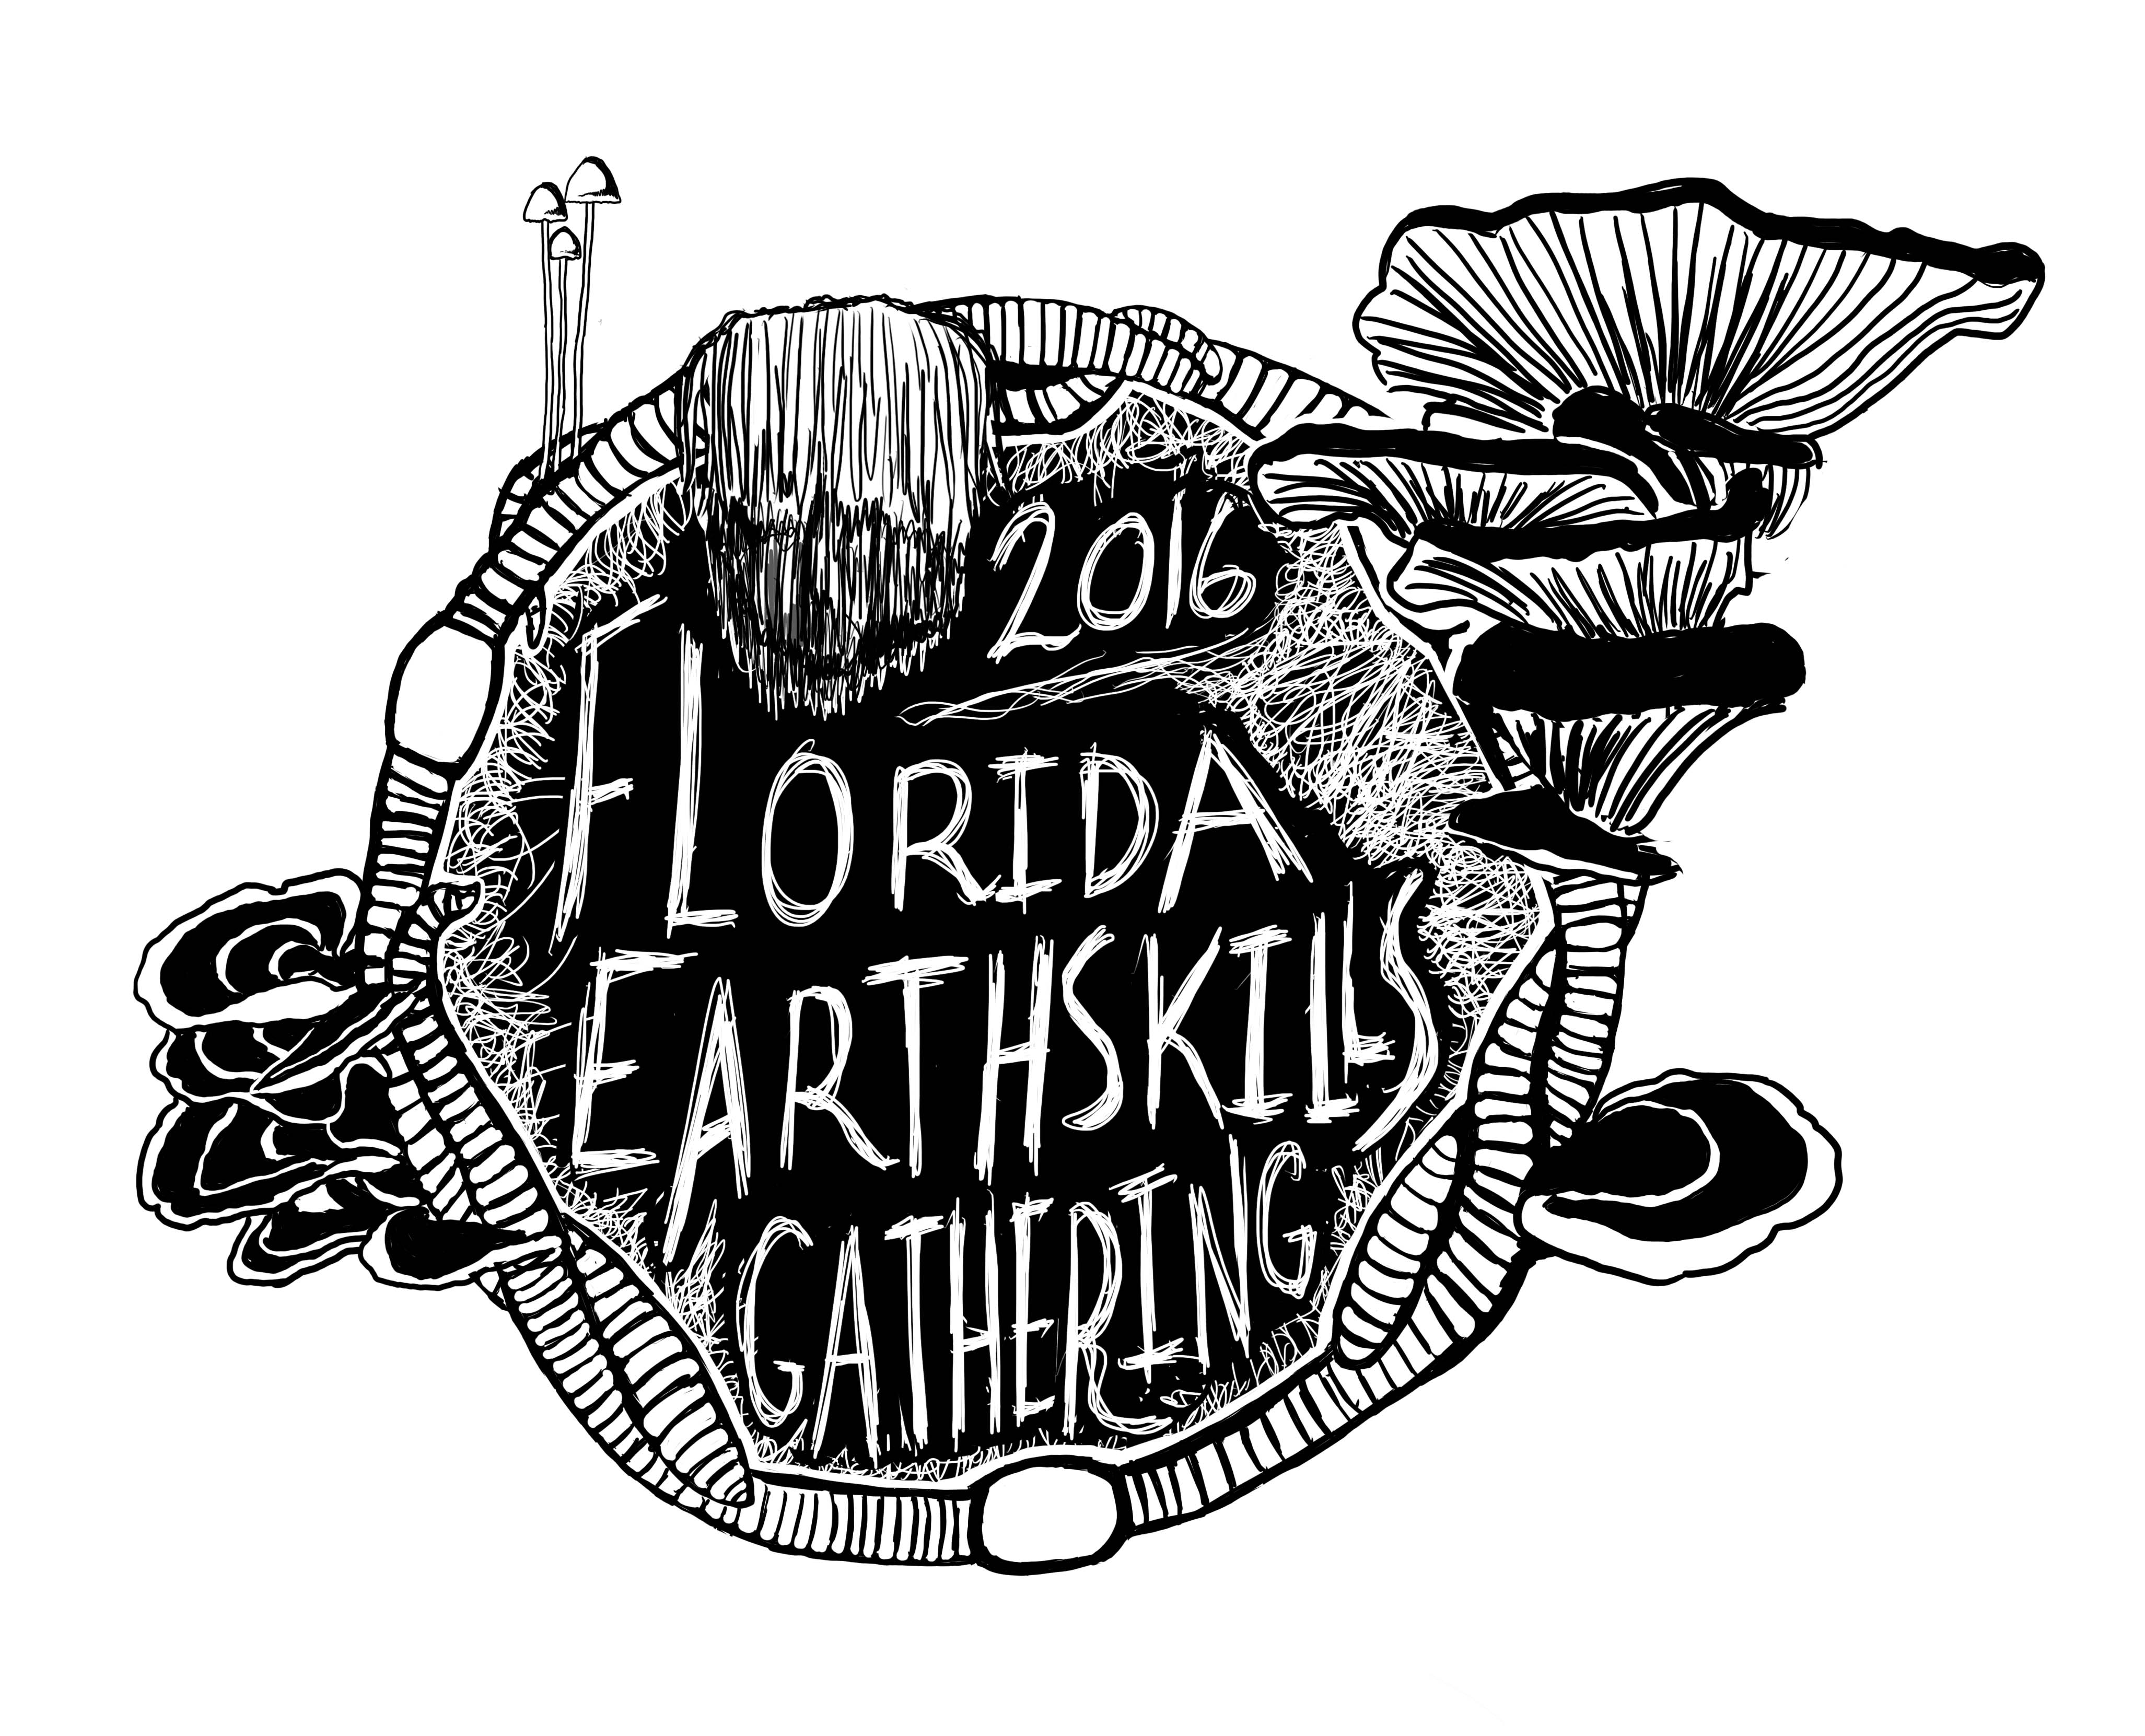 2016 Florida Earthskills Gathering Official Shirt Design